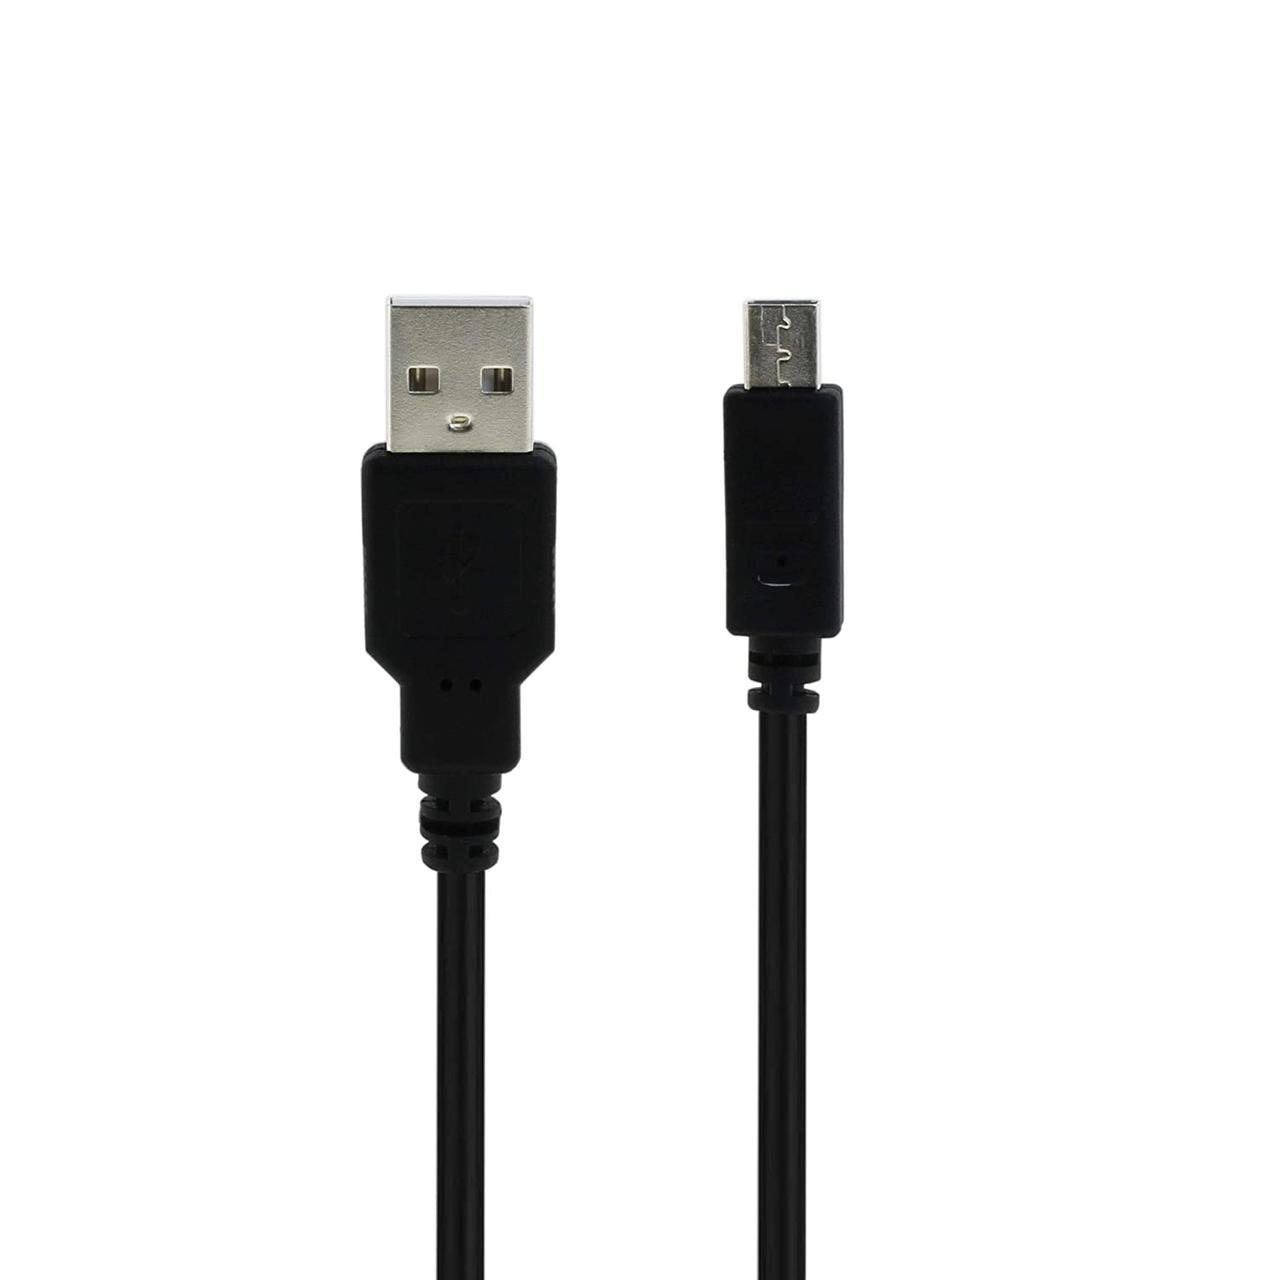 Weiss USB-кабель для заряджання Nintendo 3DS / Nintendo 3DS XL / Nintendo 2DS / Nintendo DSi / Nintendo Dsi XL / New Nintendo 3DS